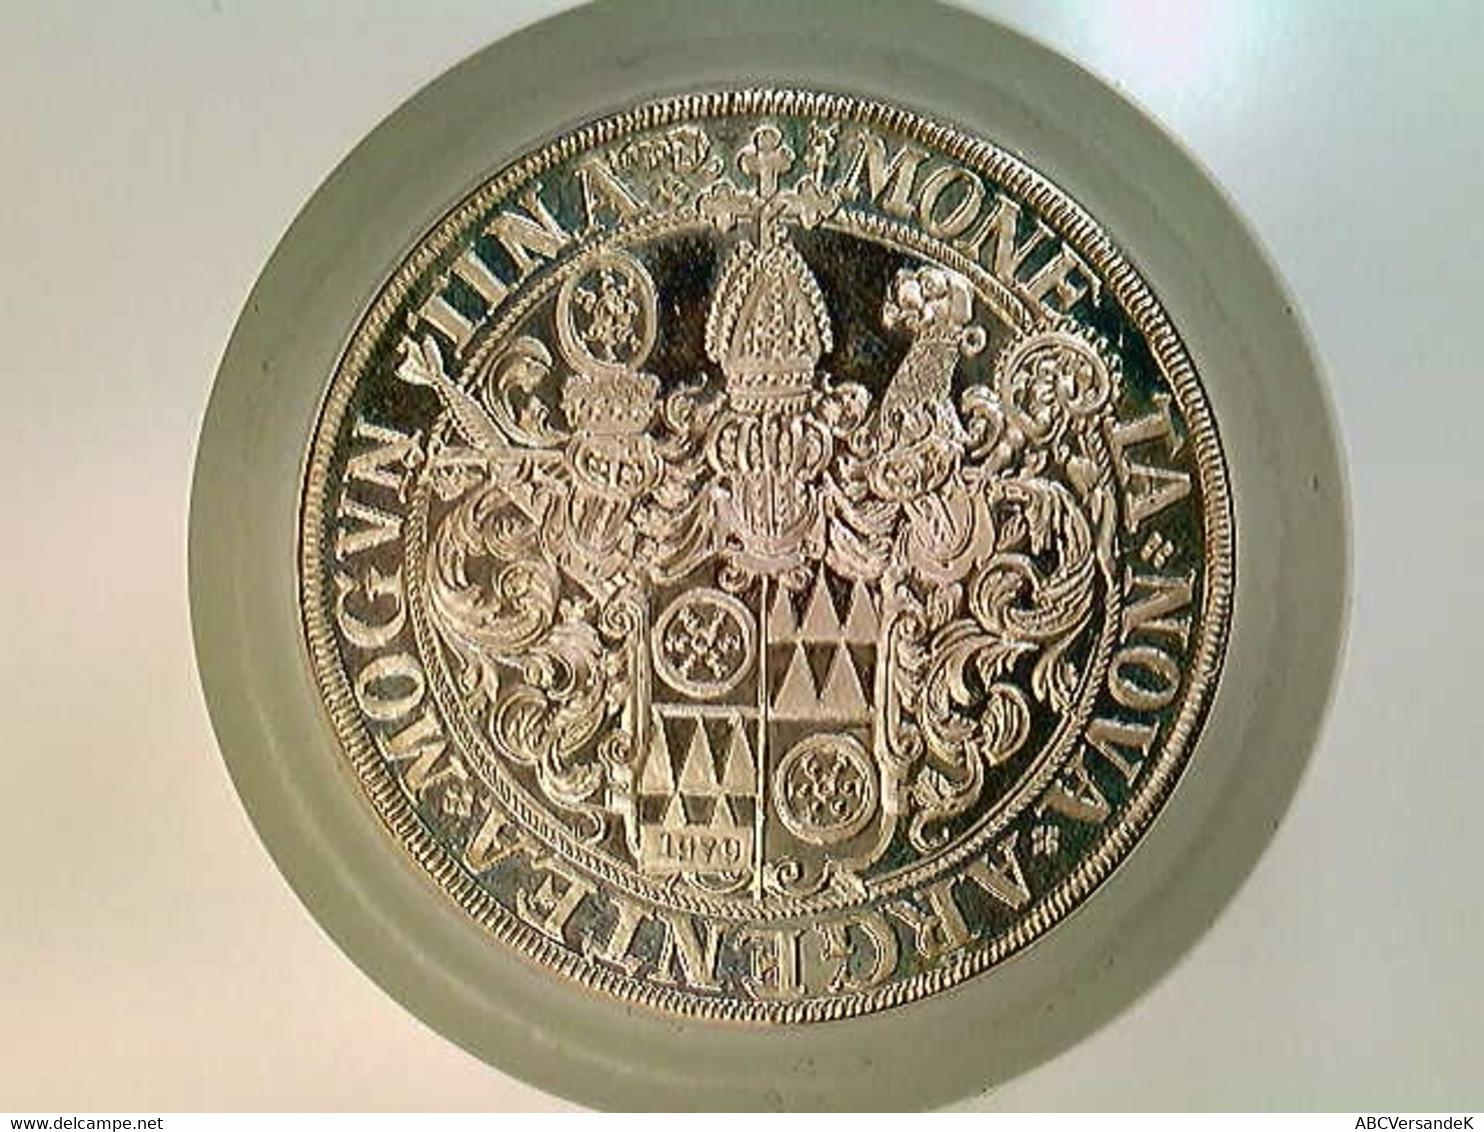 Medaille, Moneta Nova Argentea Moguntina 1630, ANselmi Casimiri, Nachprägung 1979, Silber 835, 28,8 Gr., 42 Mm - Numismatik